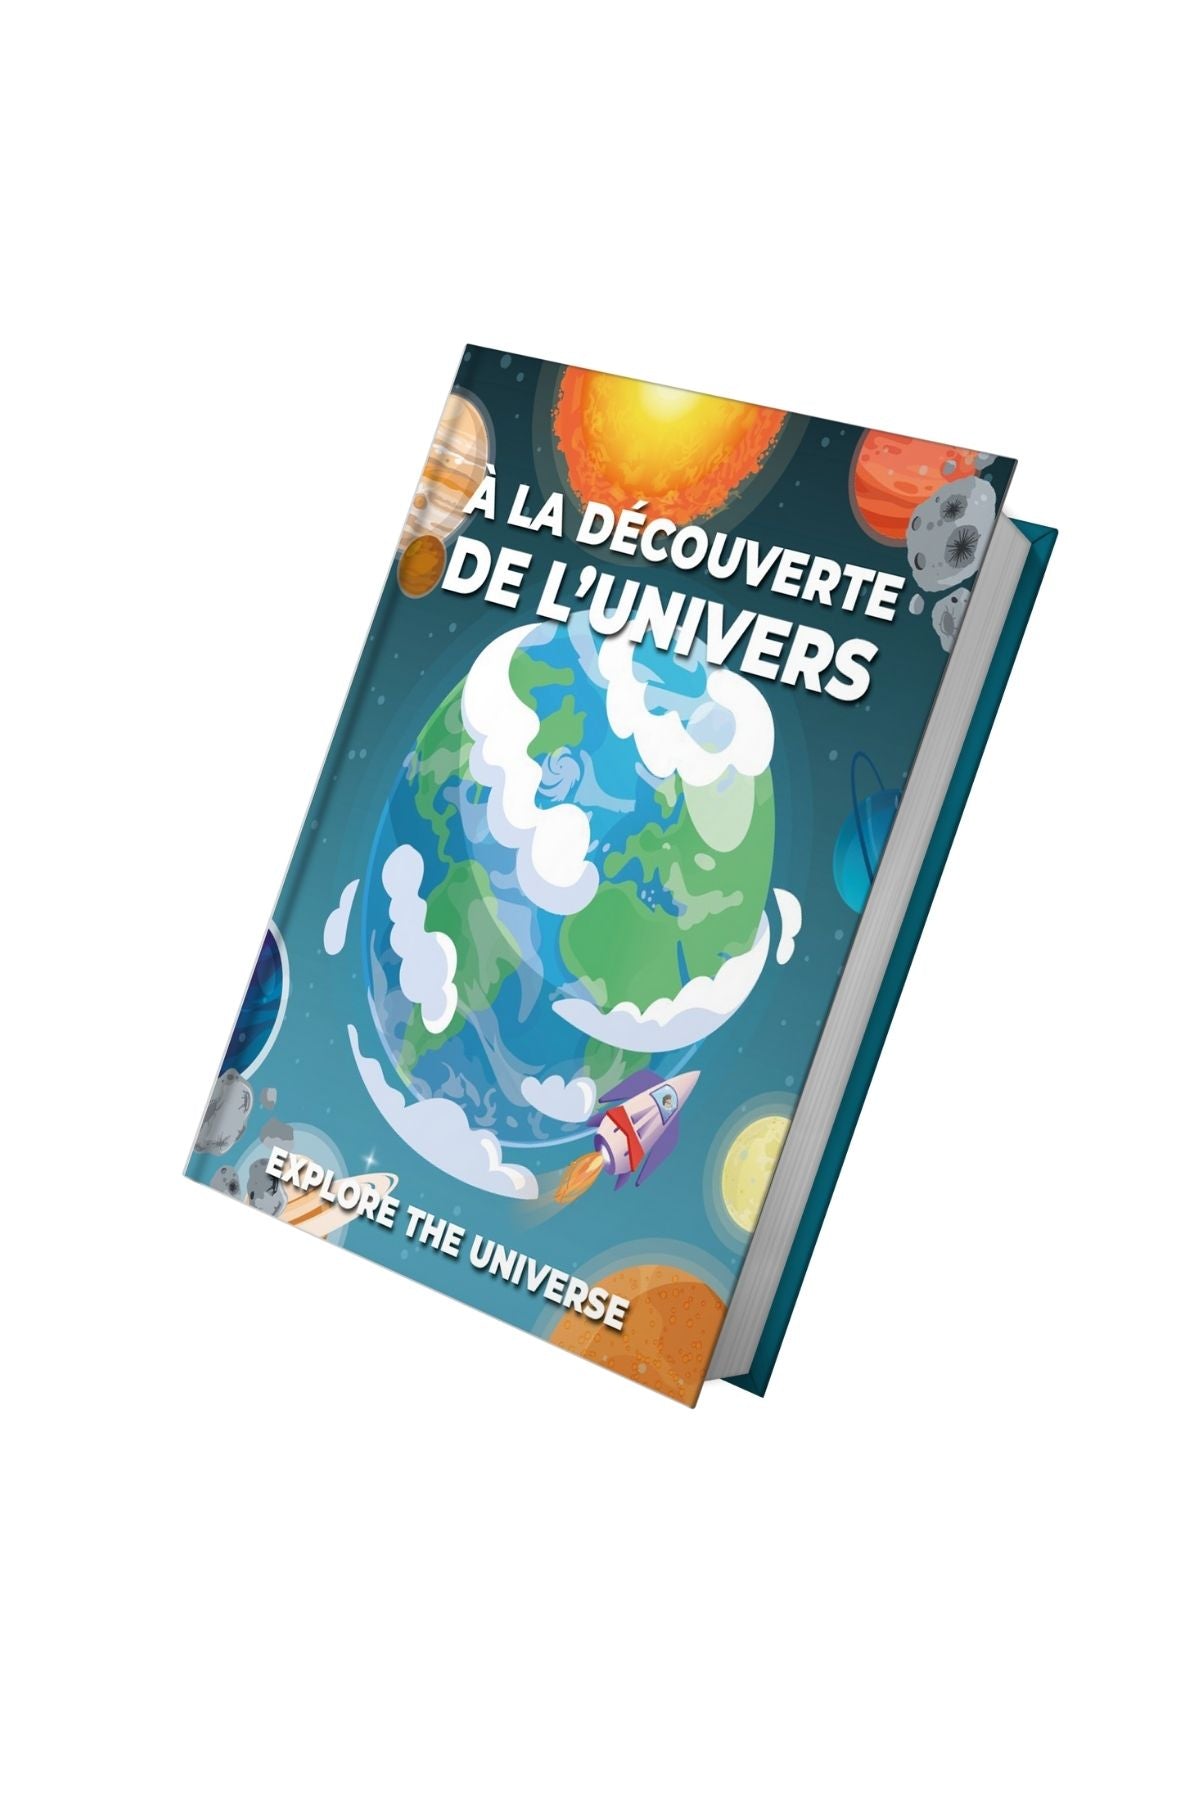 Projektor Space Rover Story "Explorer"